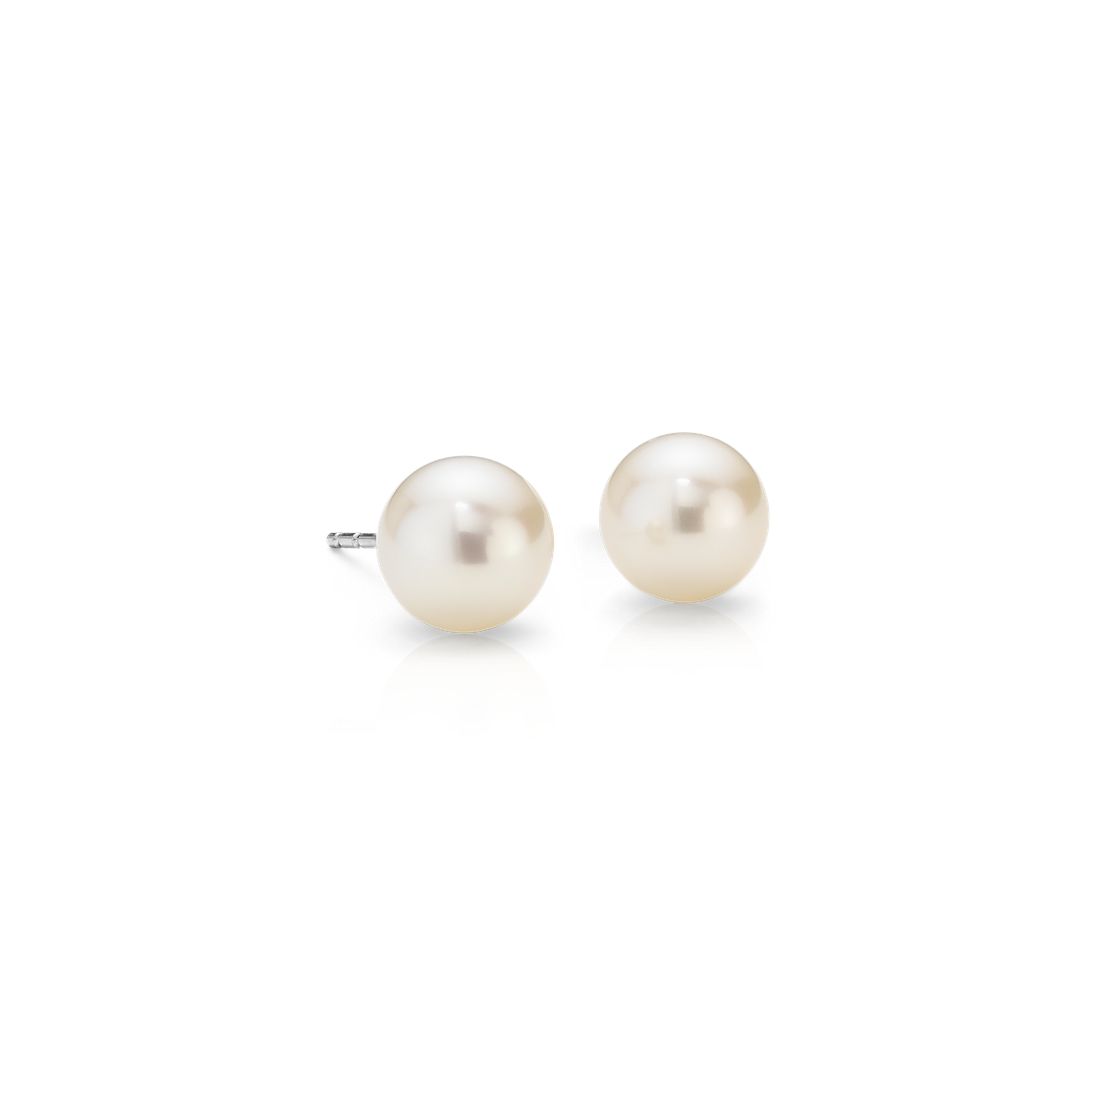 Freshwater Cultured Pearl Stud Earrings in 14k White Gold (7mm)